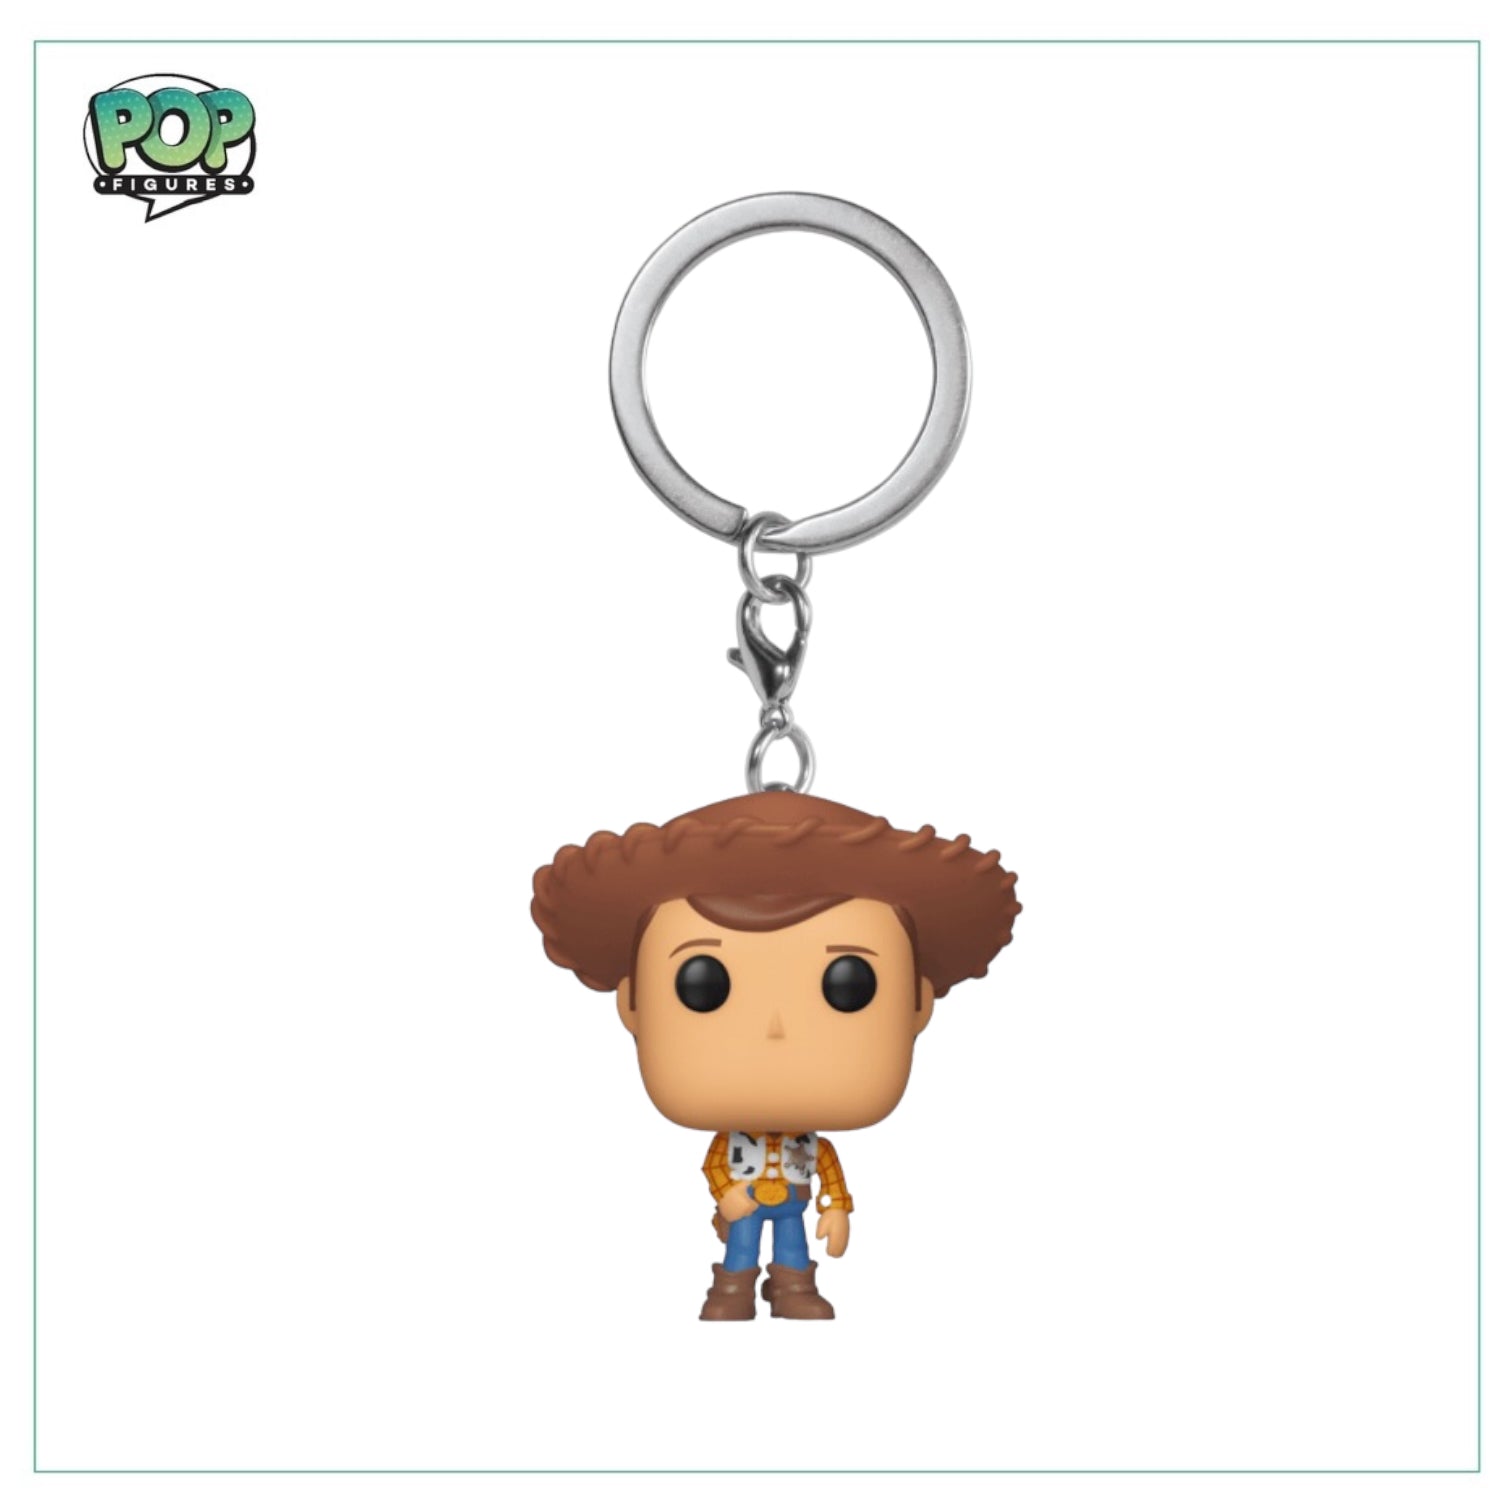 Sheriff Woody Pocket Pop Keychain! - Toy Story 4